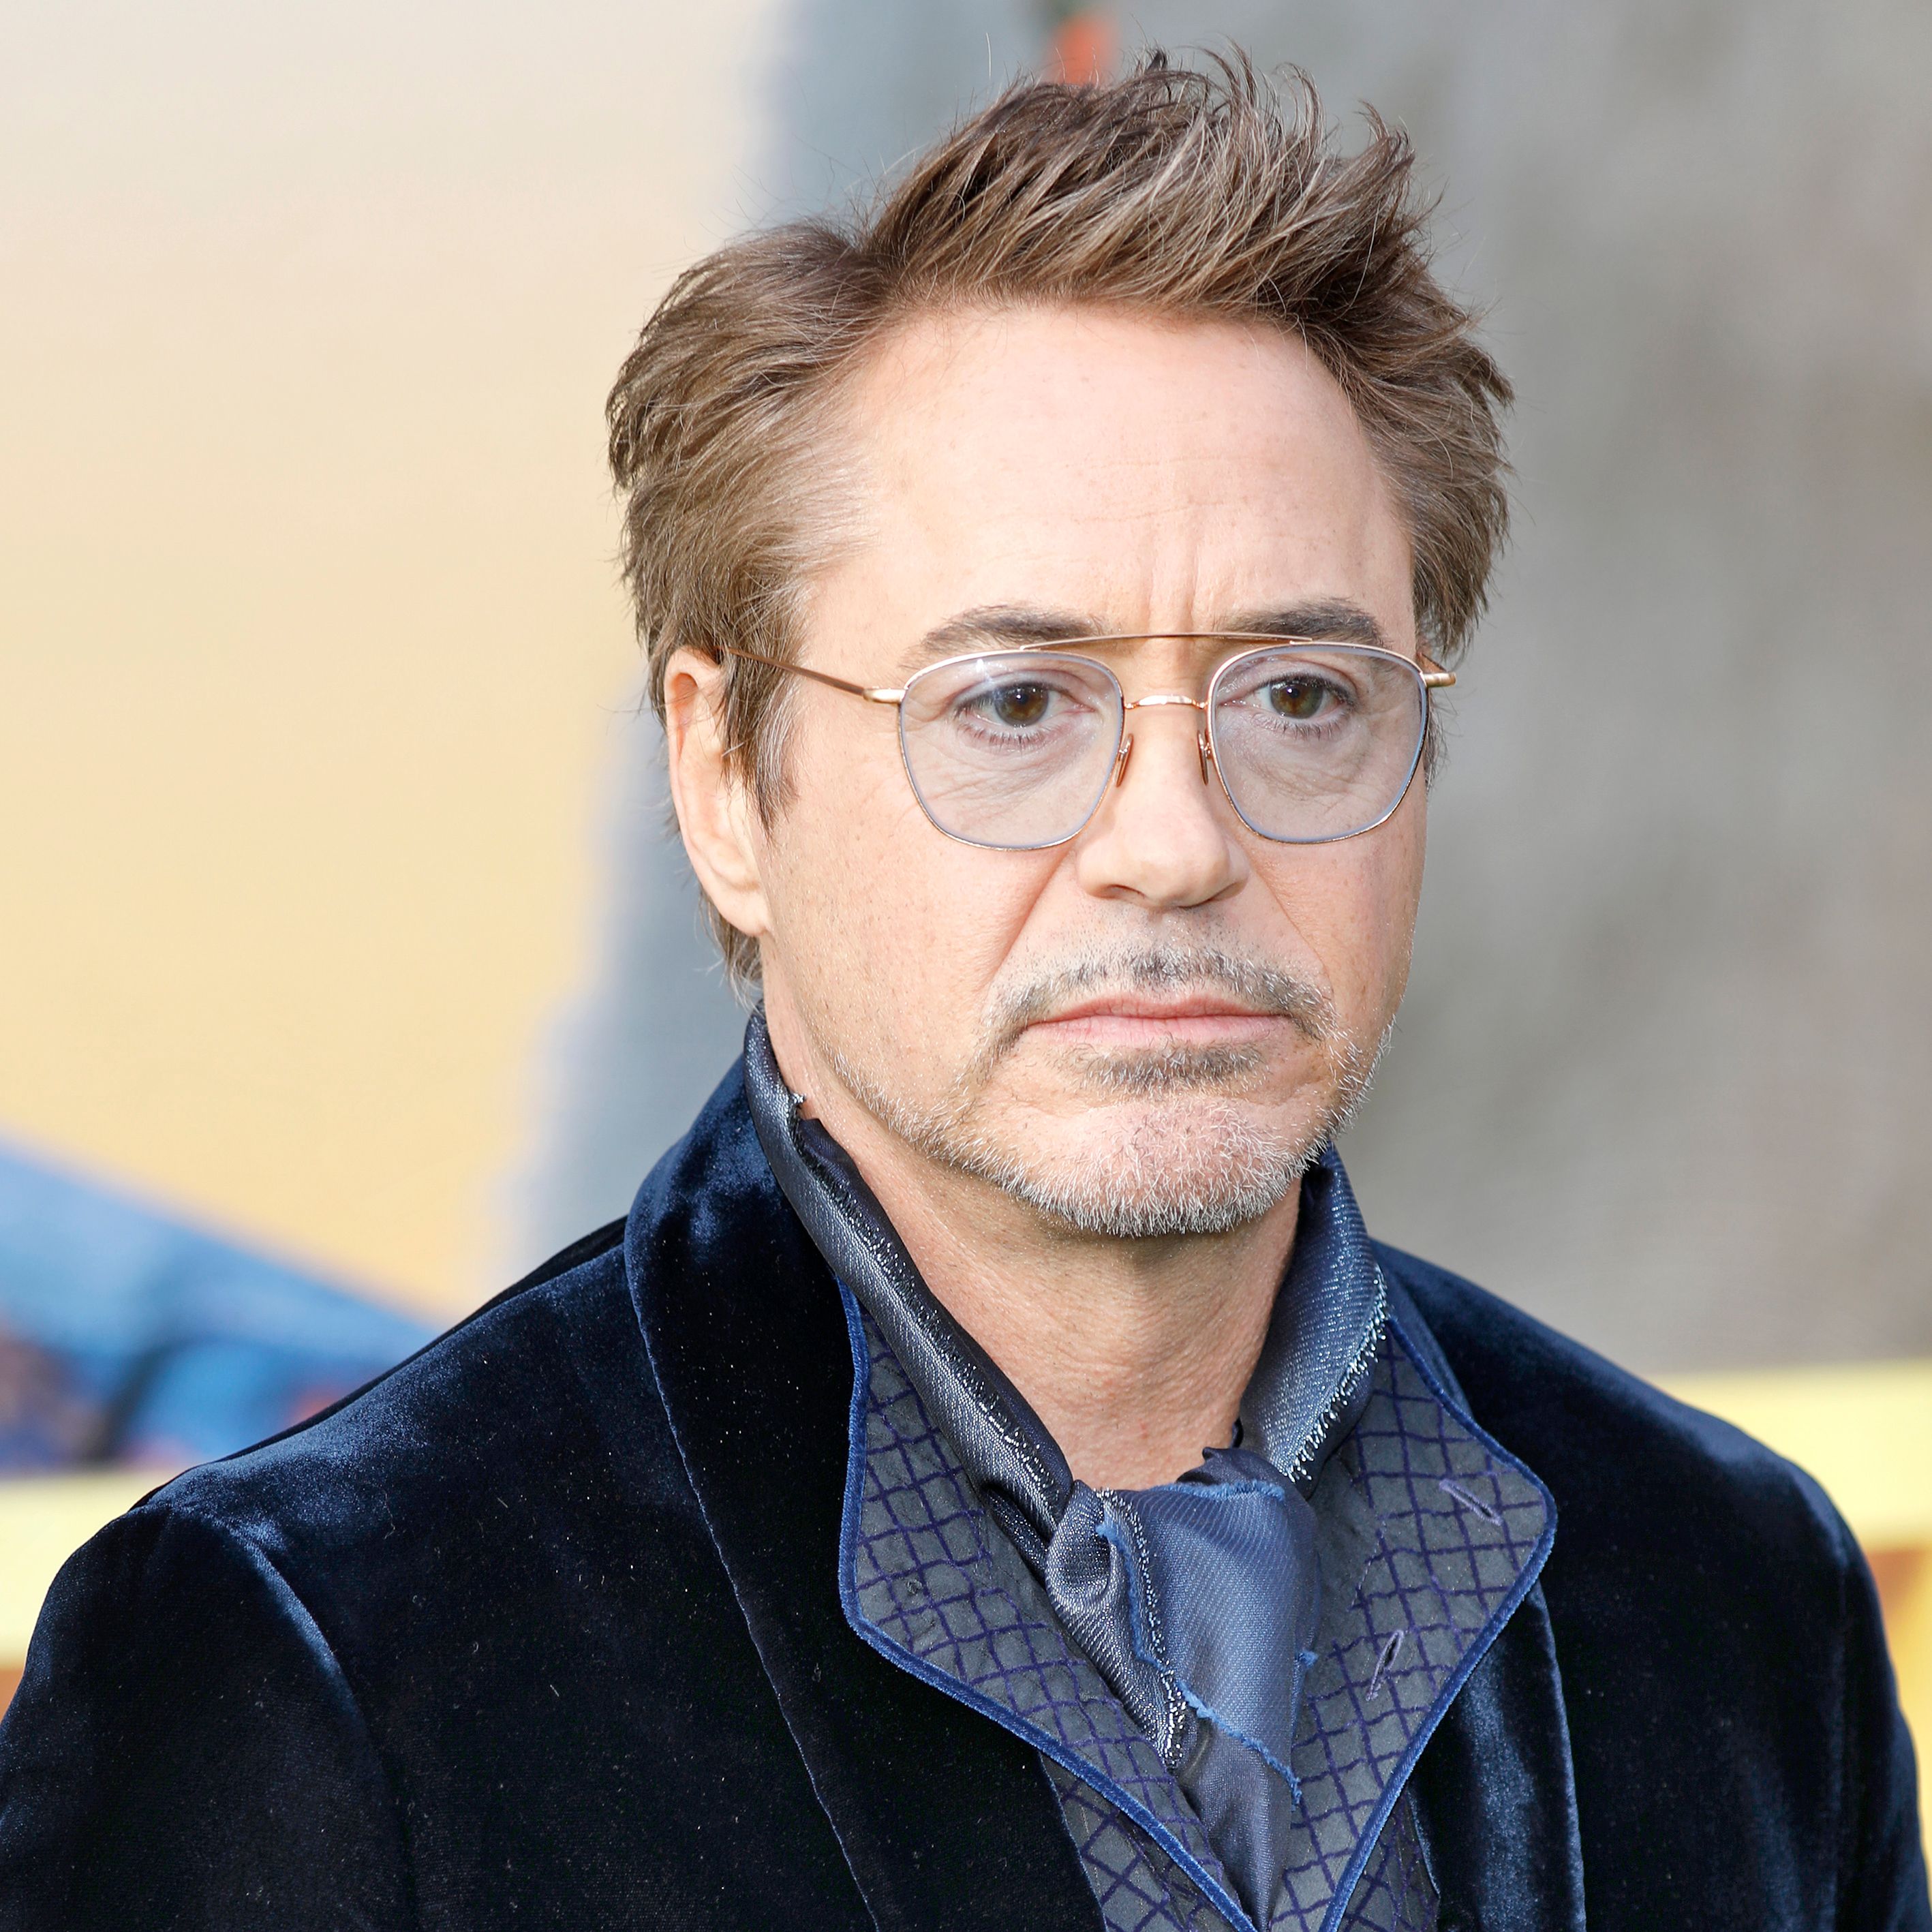 Robert Downey Jr. - Wikipedia